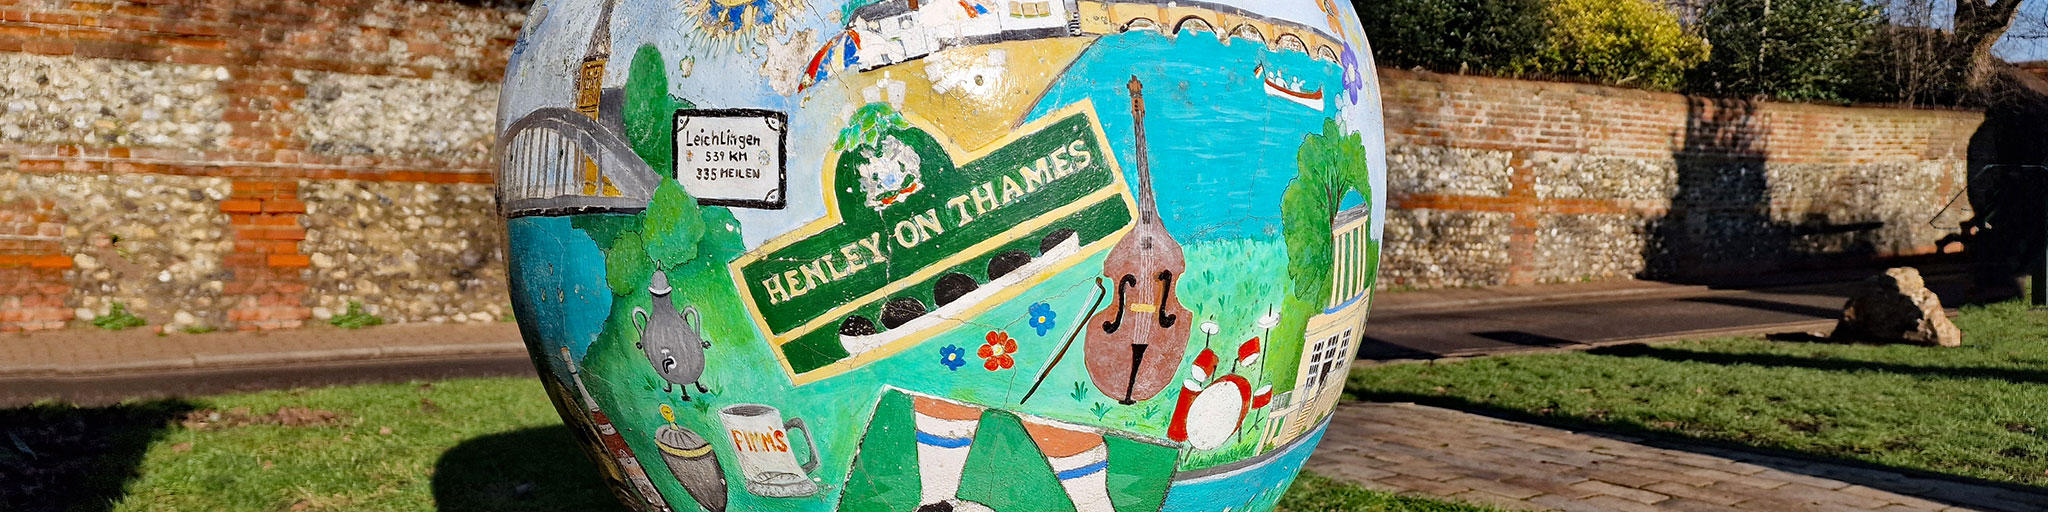 Henley Probus Club: Contact Us Photo copyright Nigel Balchin